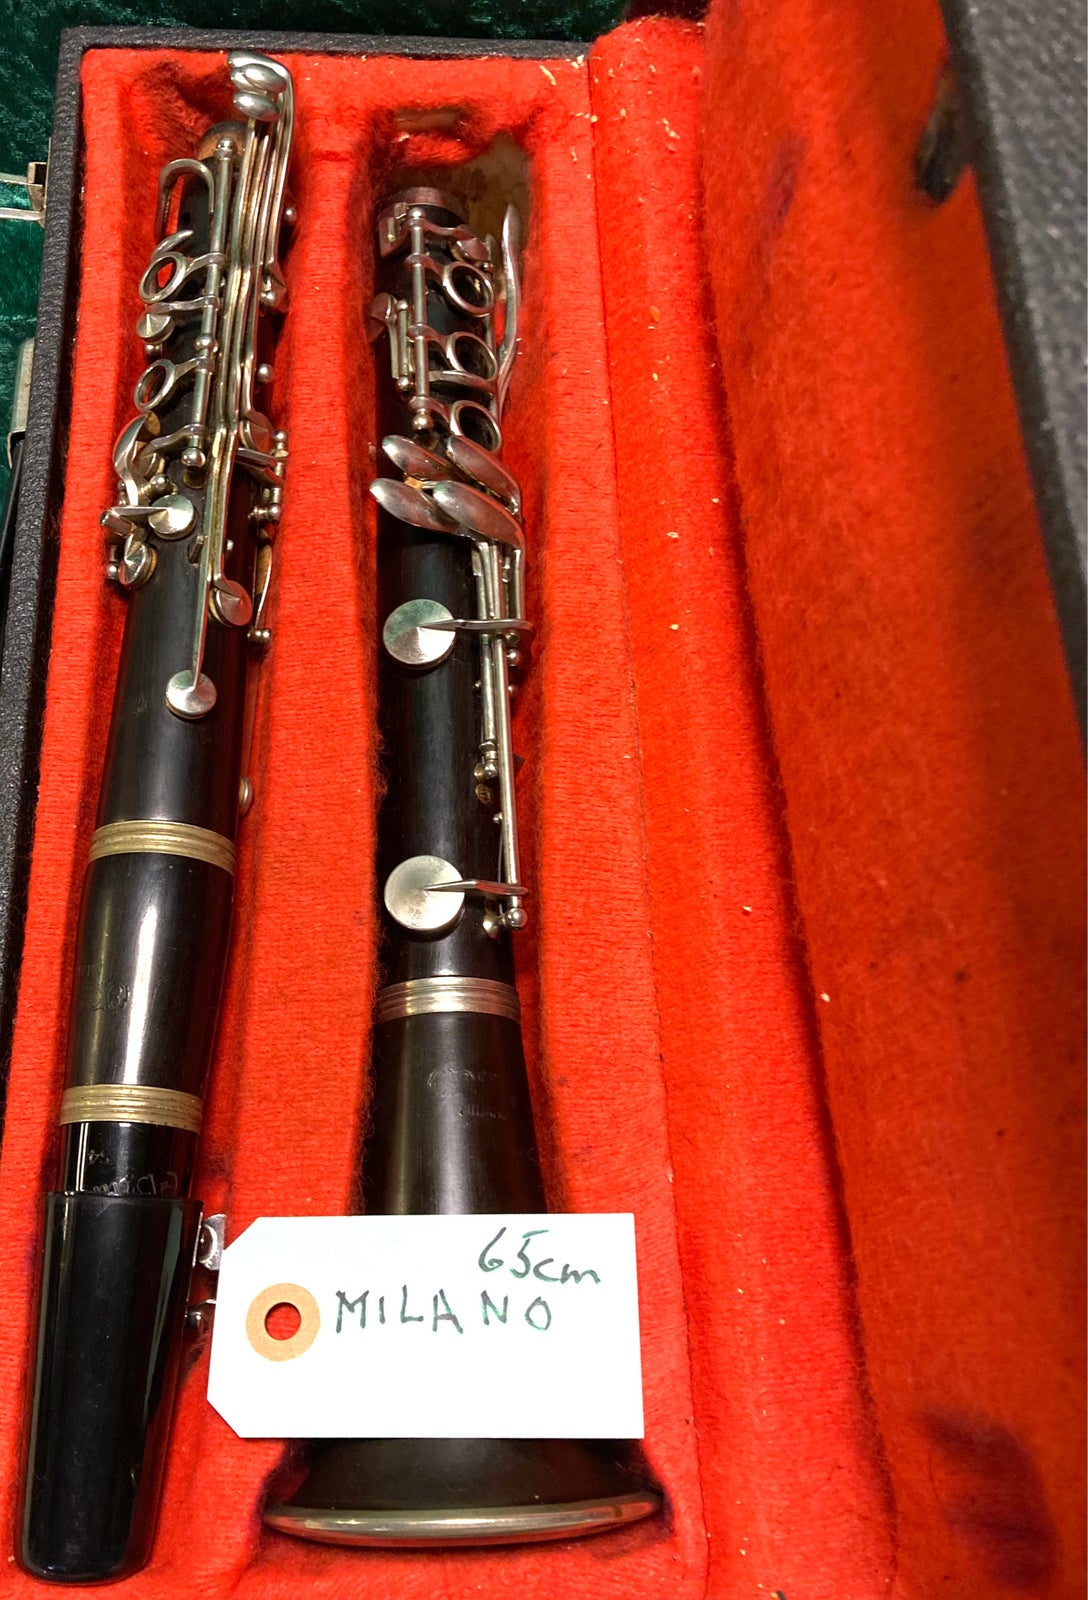 Clarinet, ORSI MILANO Antik 65 cm.